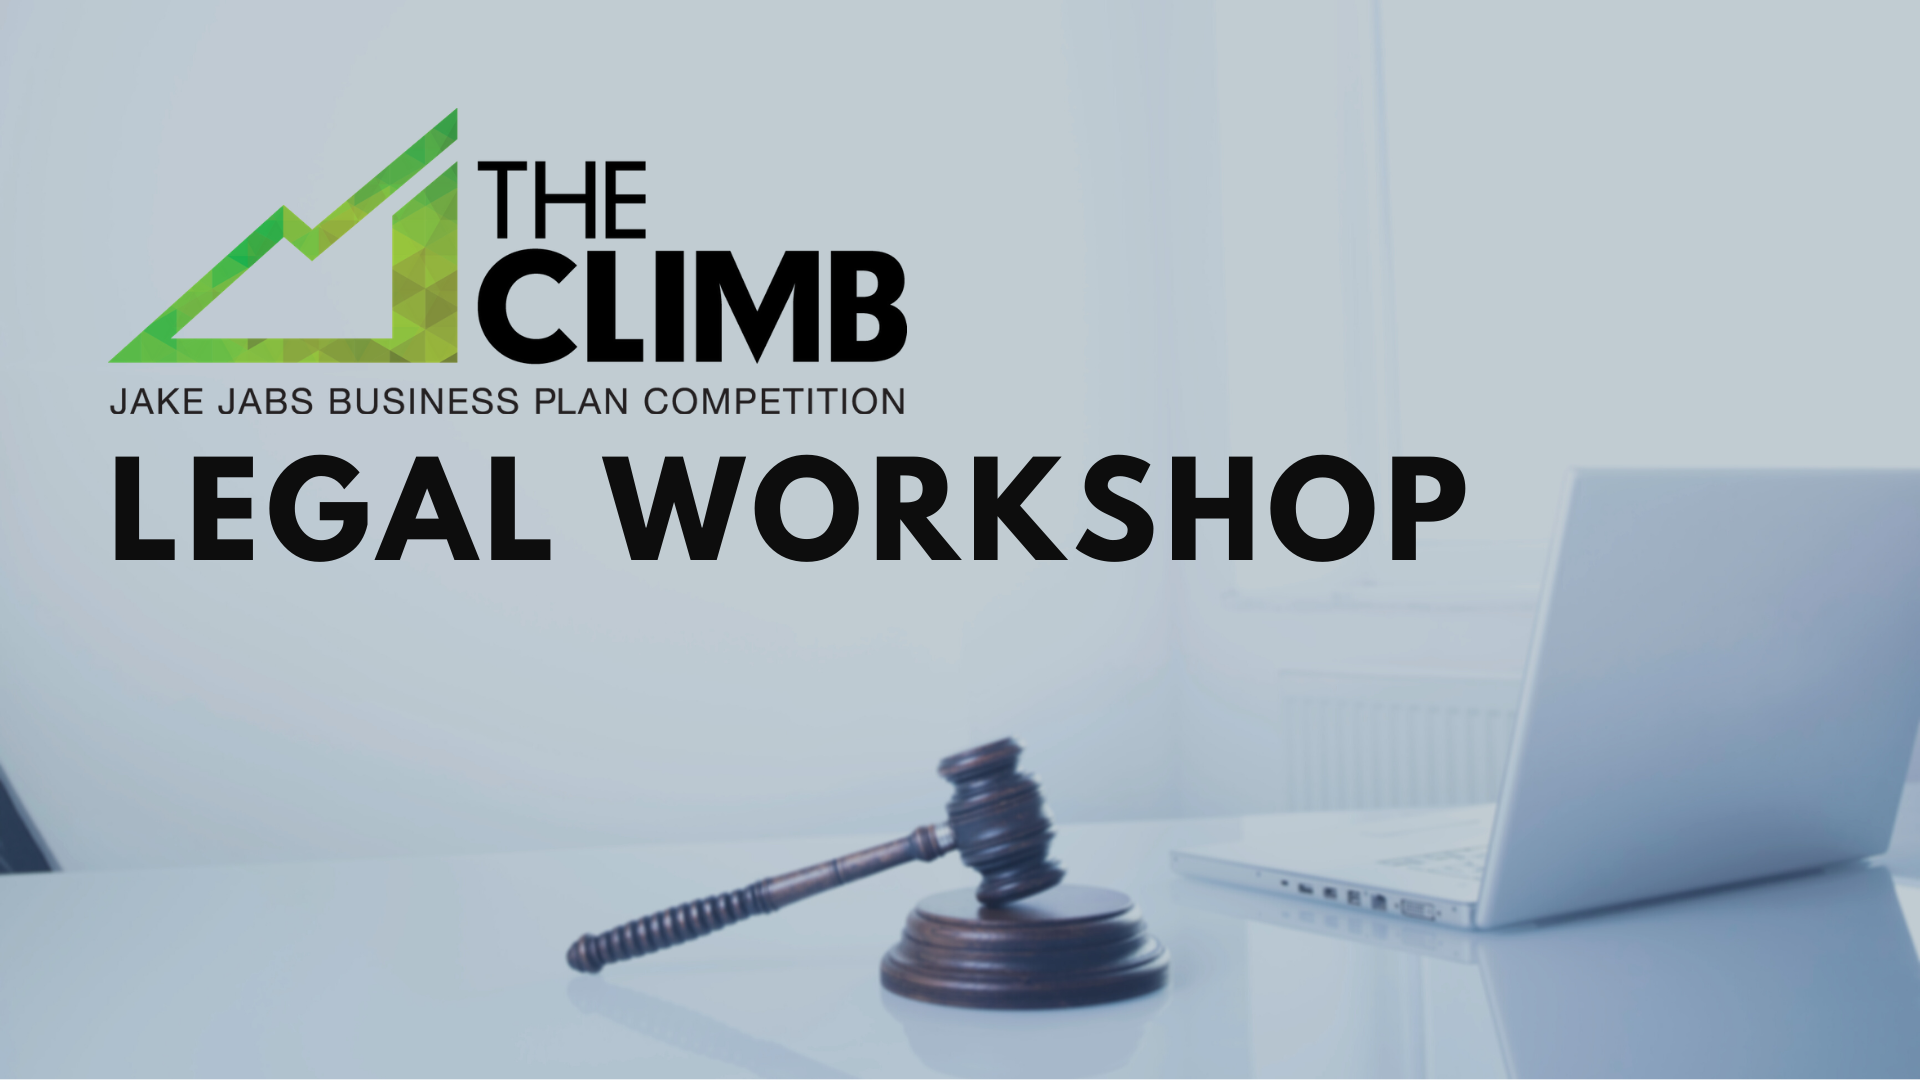 THE CLIMB 2021 Legal Workshop